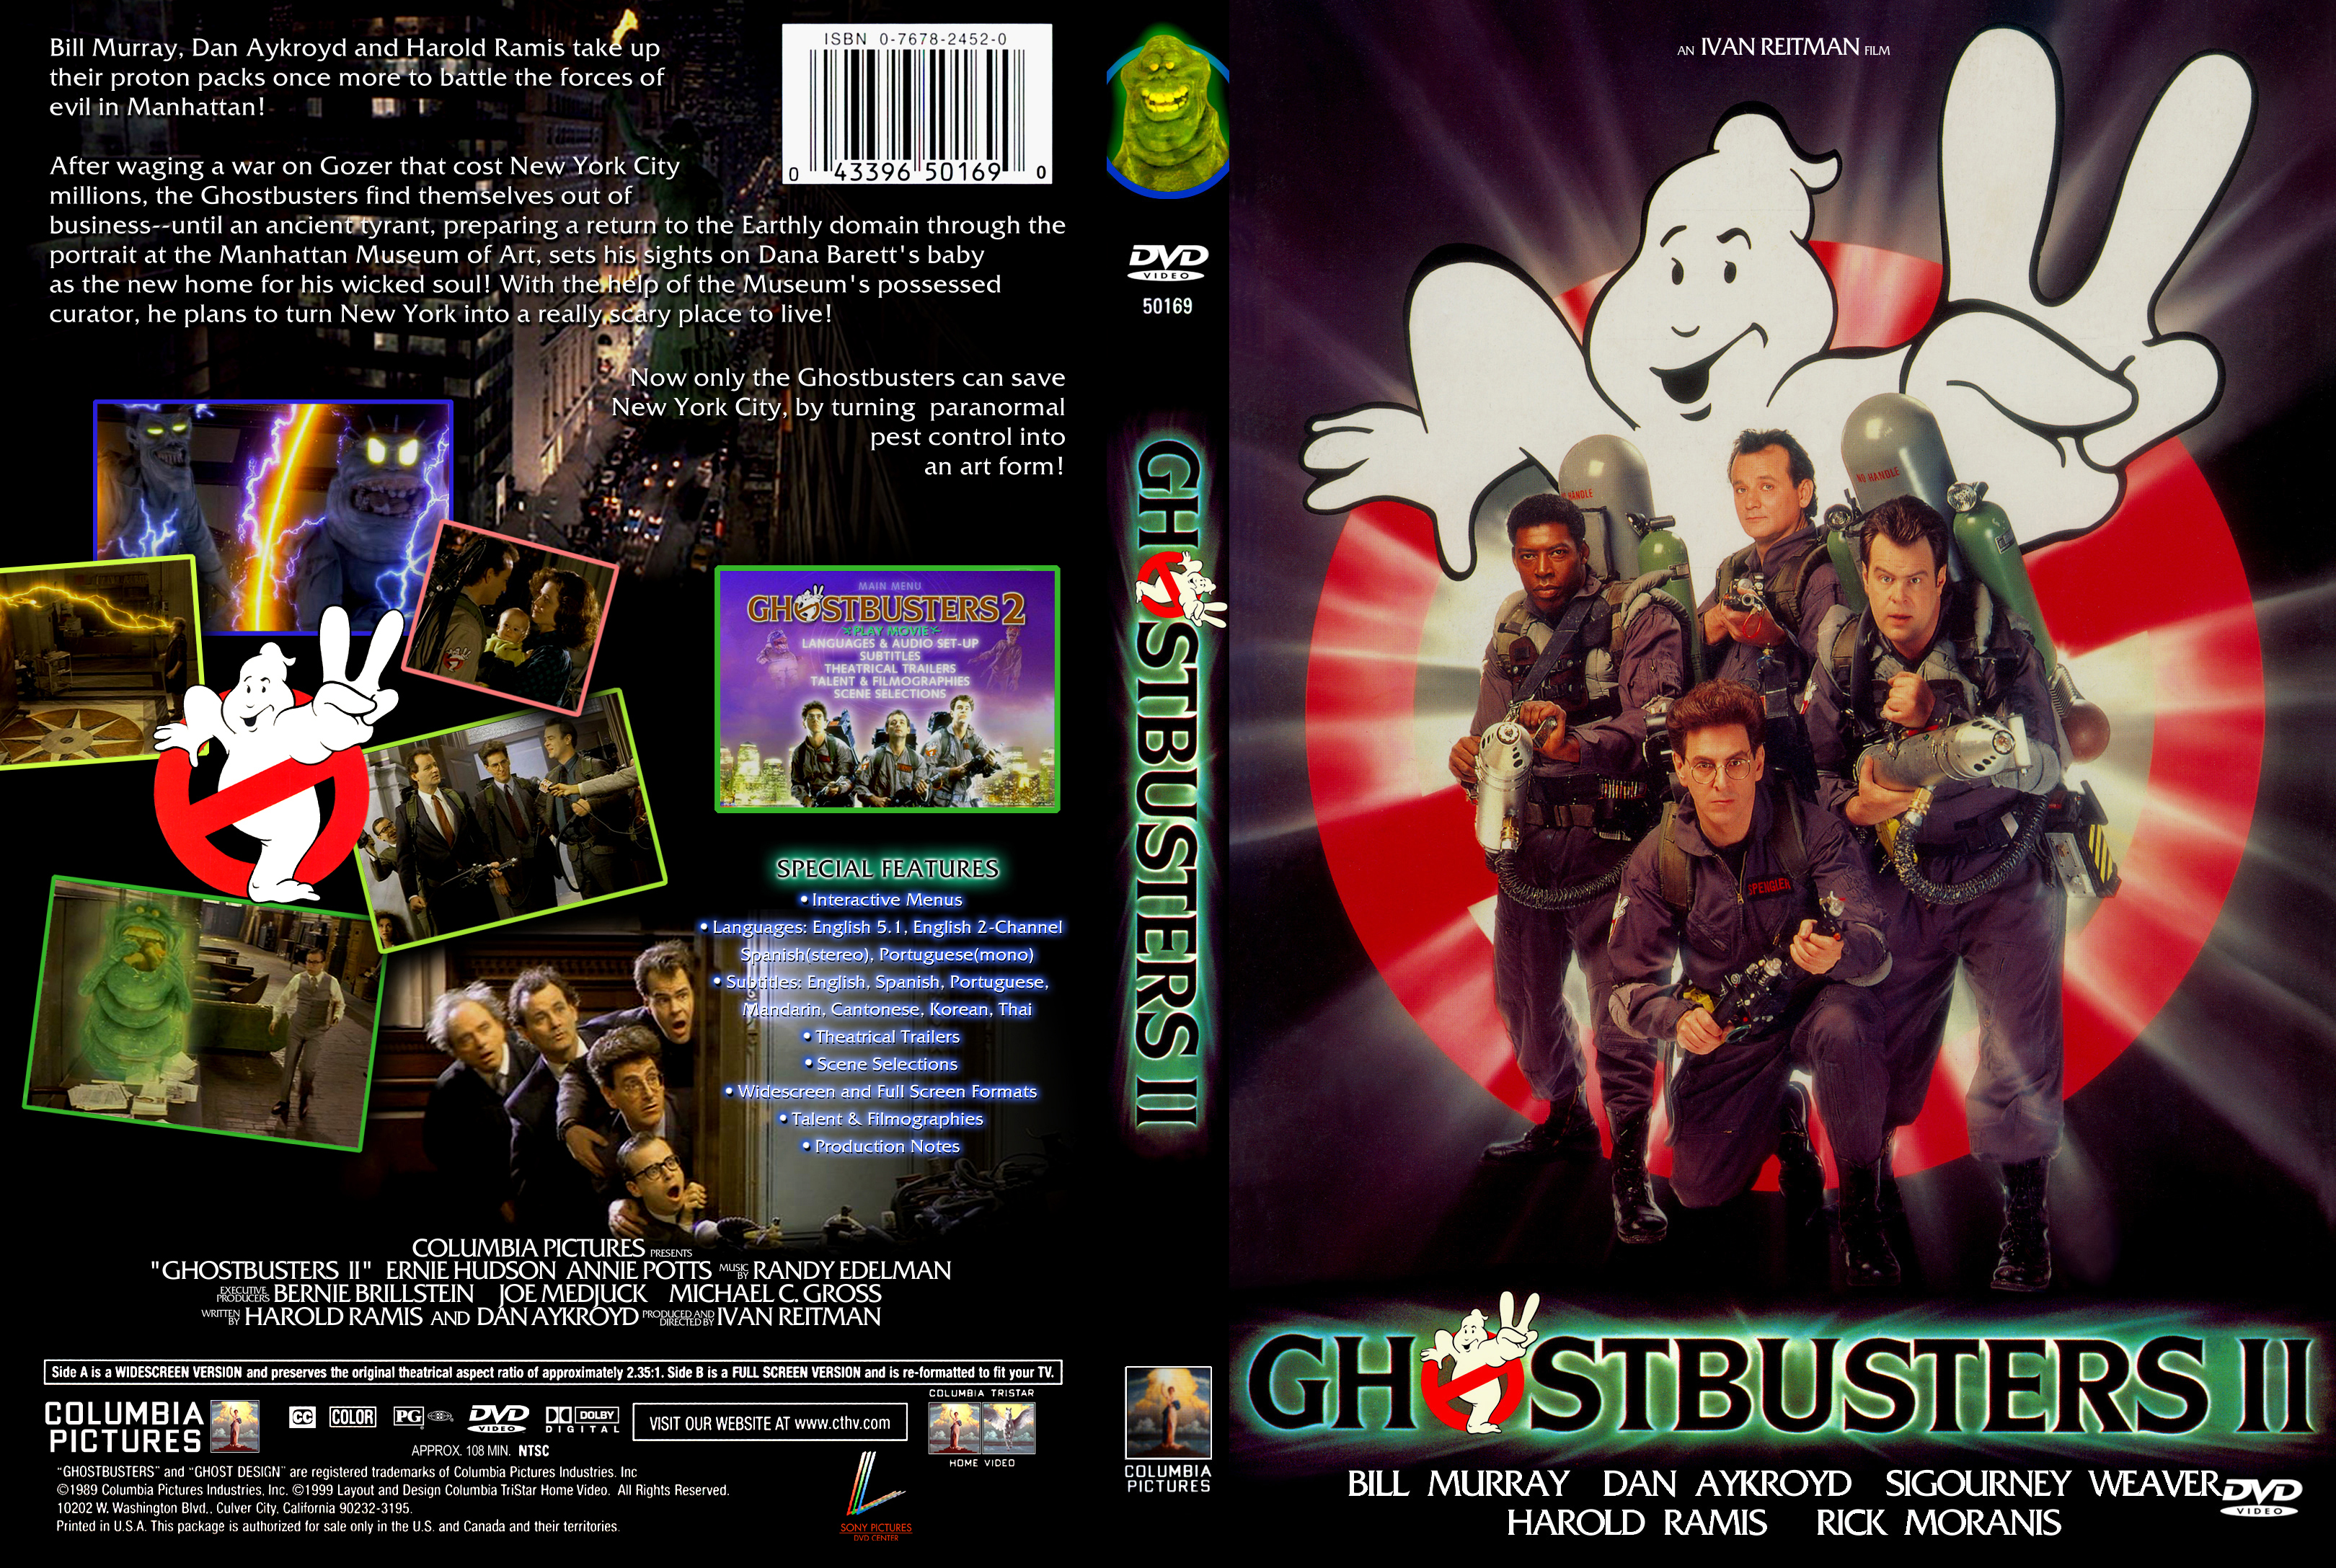 Ghostbusters II #8